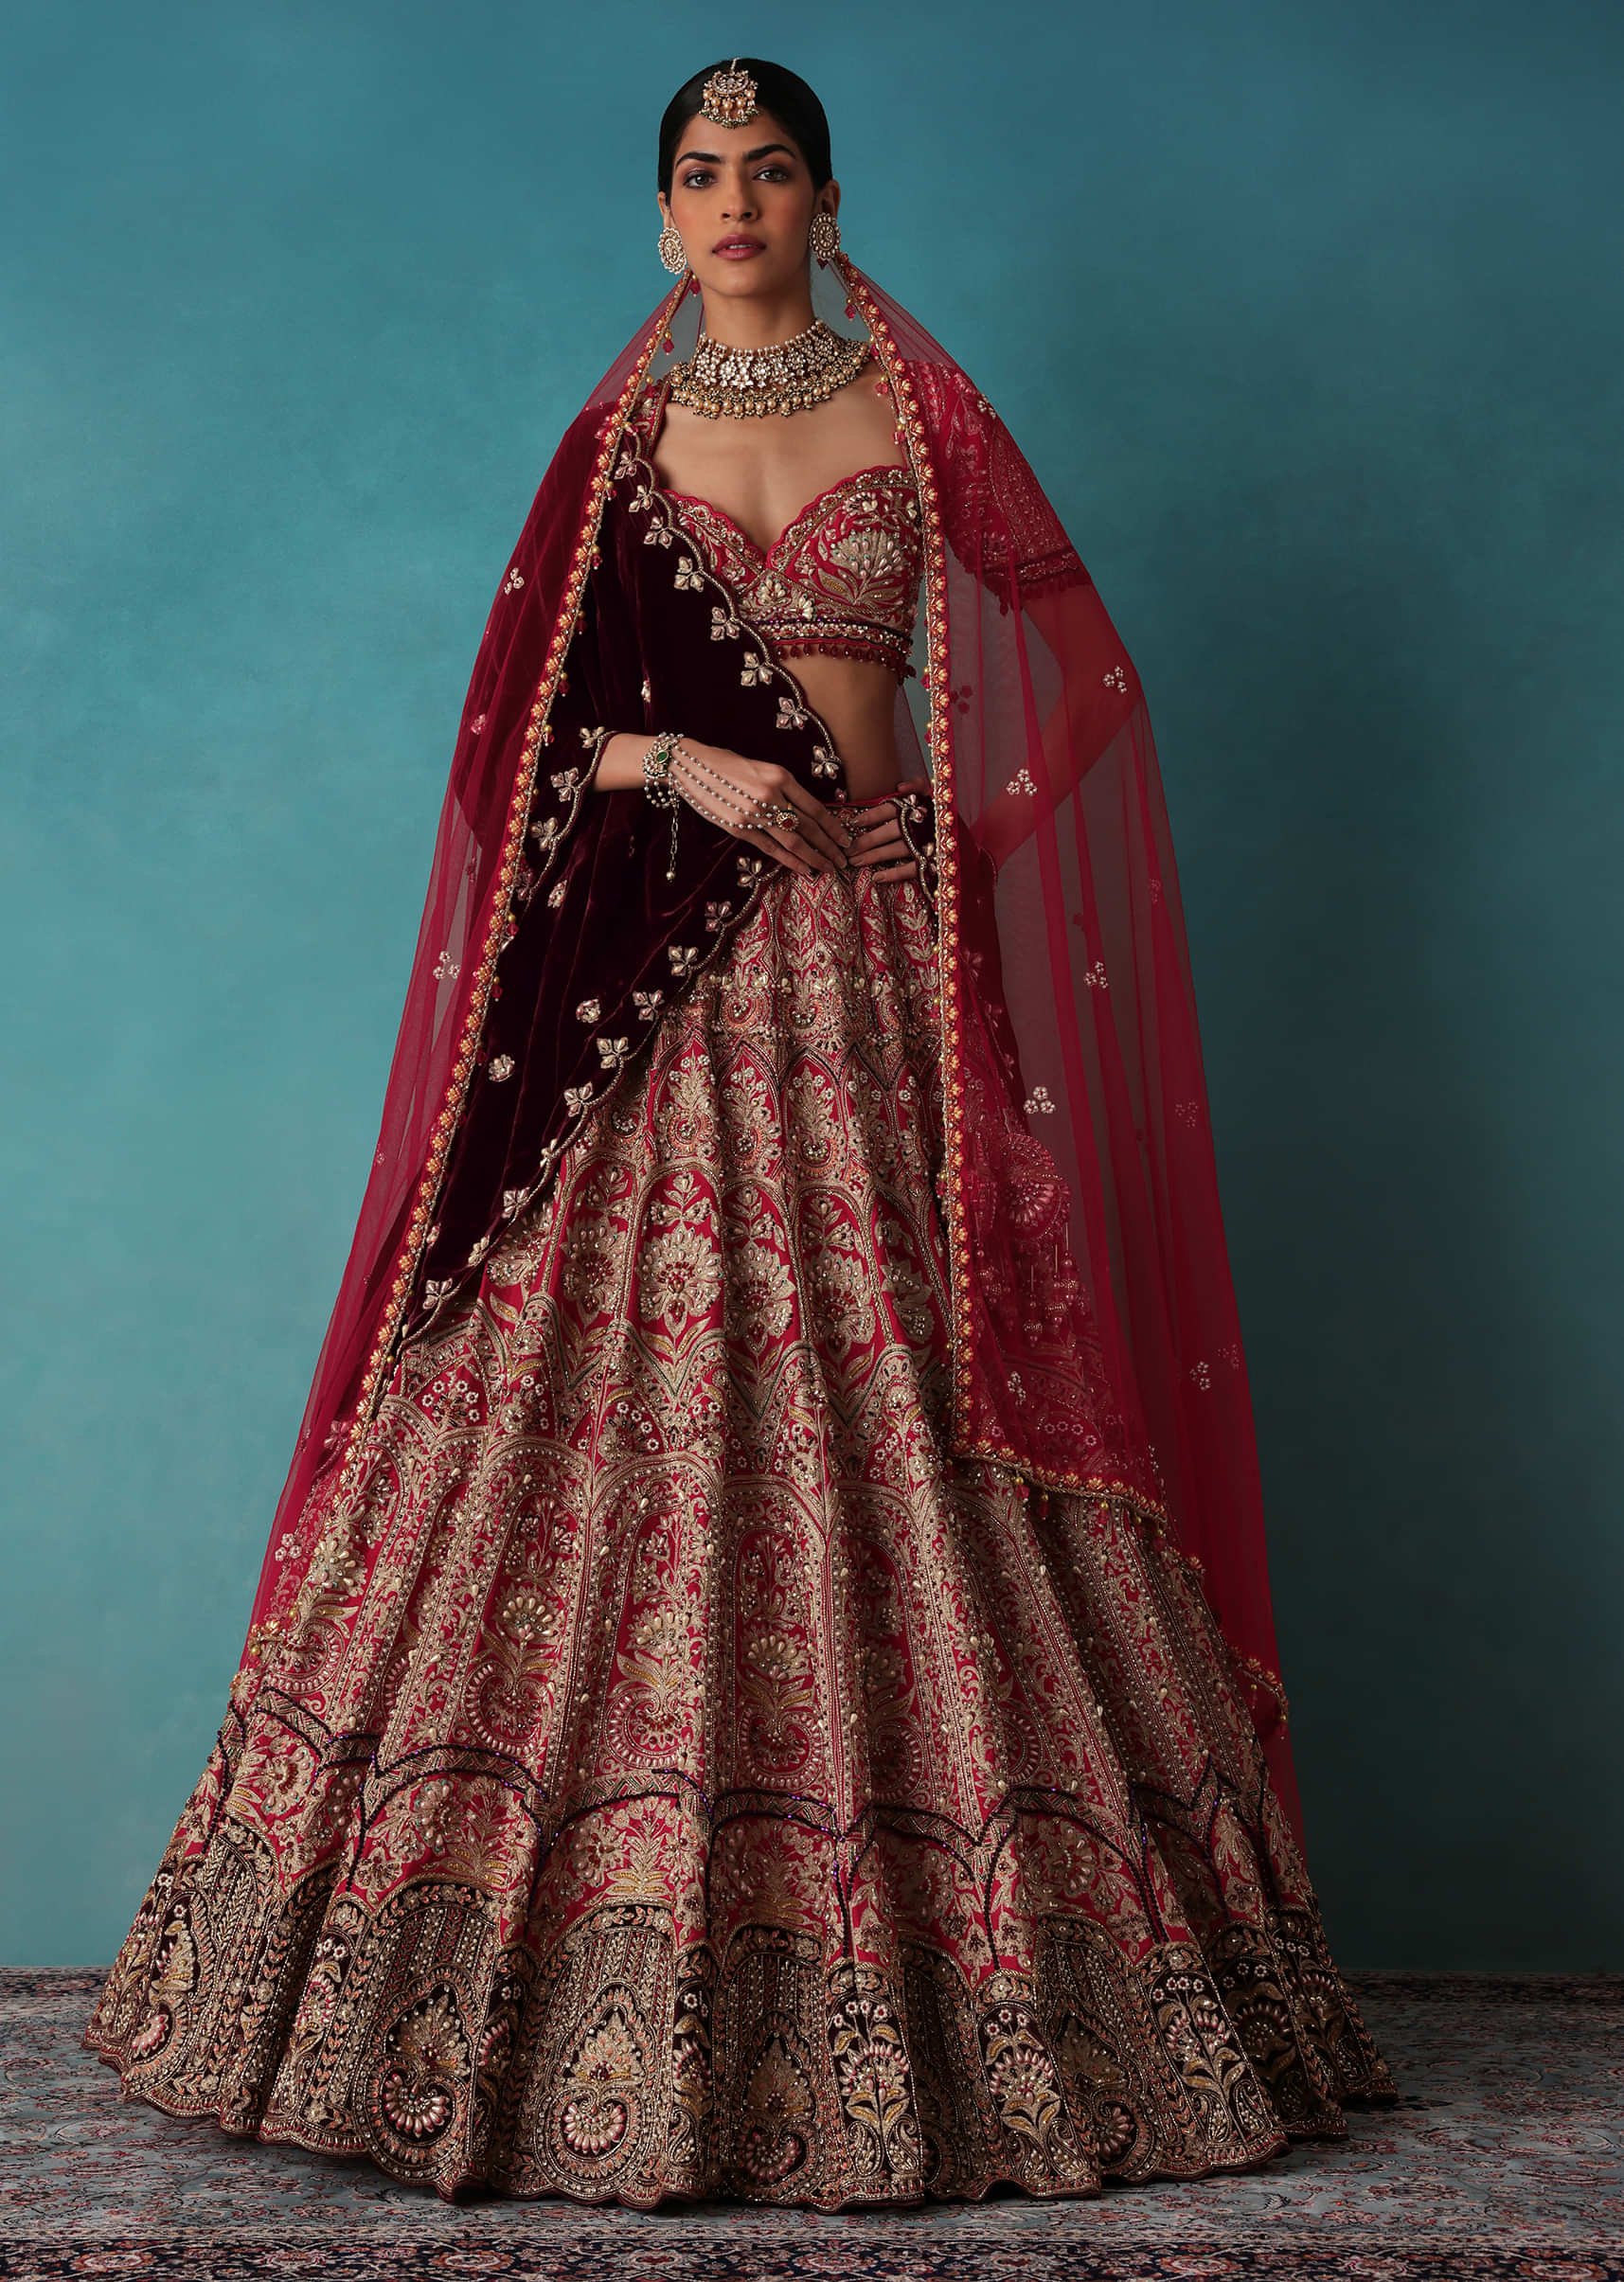 33+ Latest Modern Indian Wedding Dress ideas for guests in 2020 | Indian  wedding dress modern, Modern indian wedding, Indian wedding bridesmaids  outfits